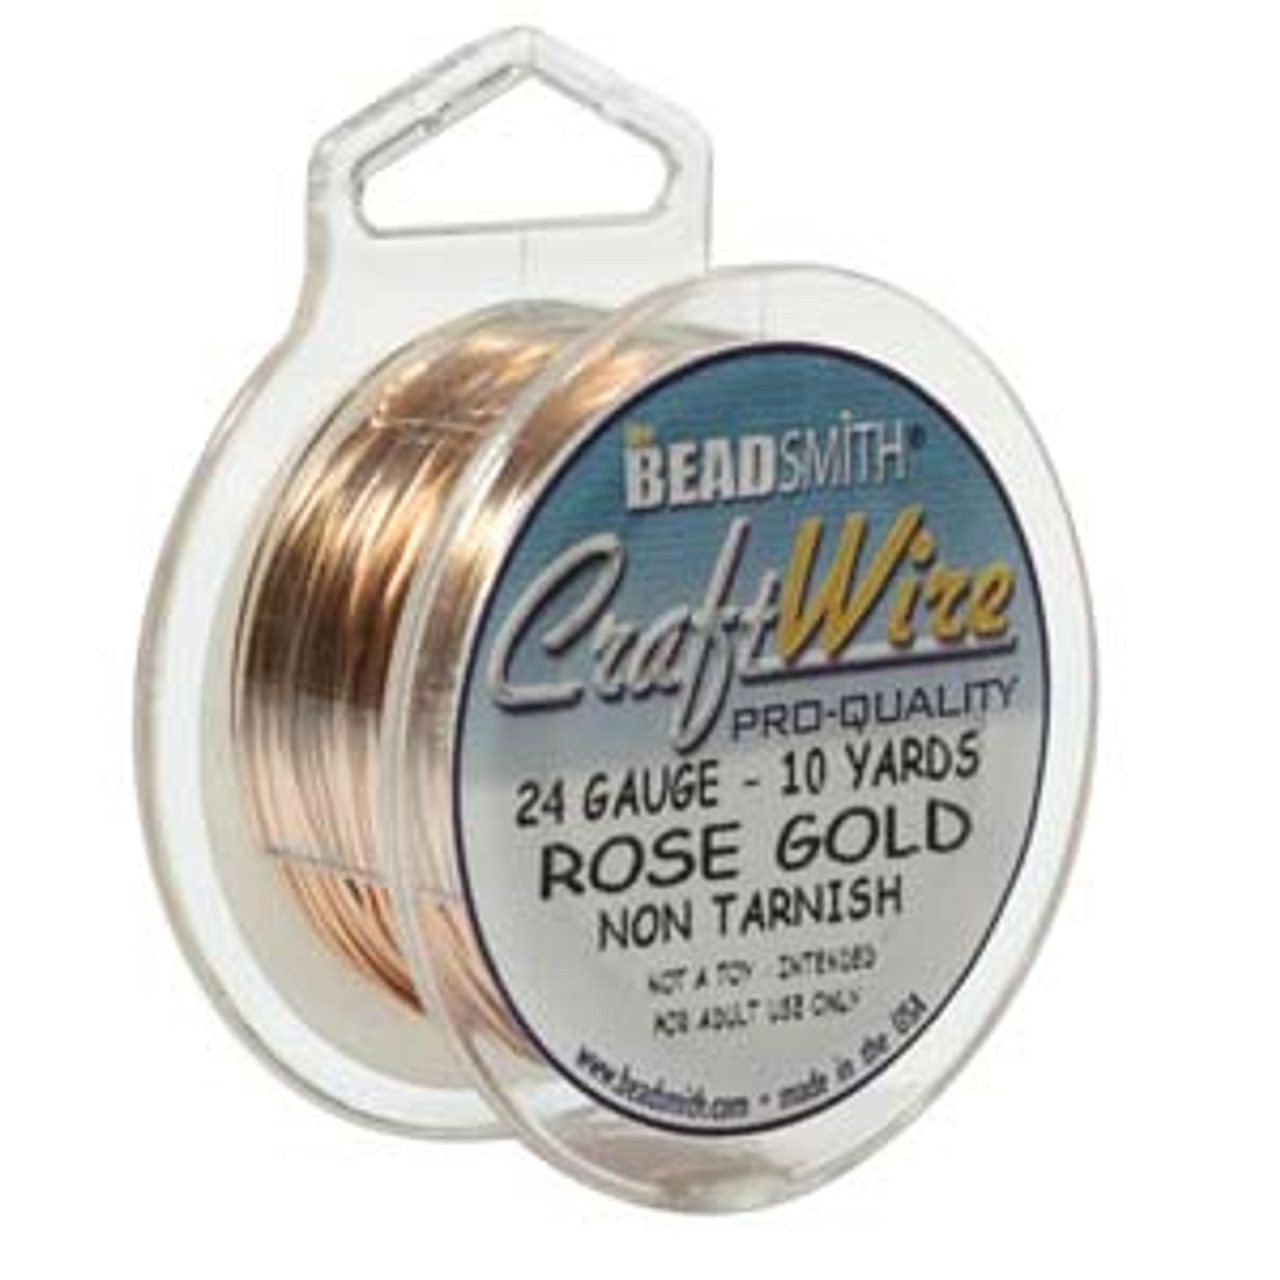 BeadSmith Craft Wire – The Bead Merchant